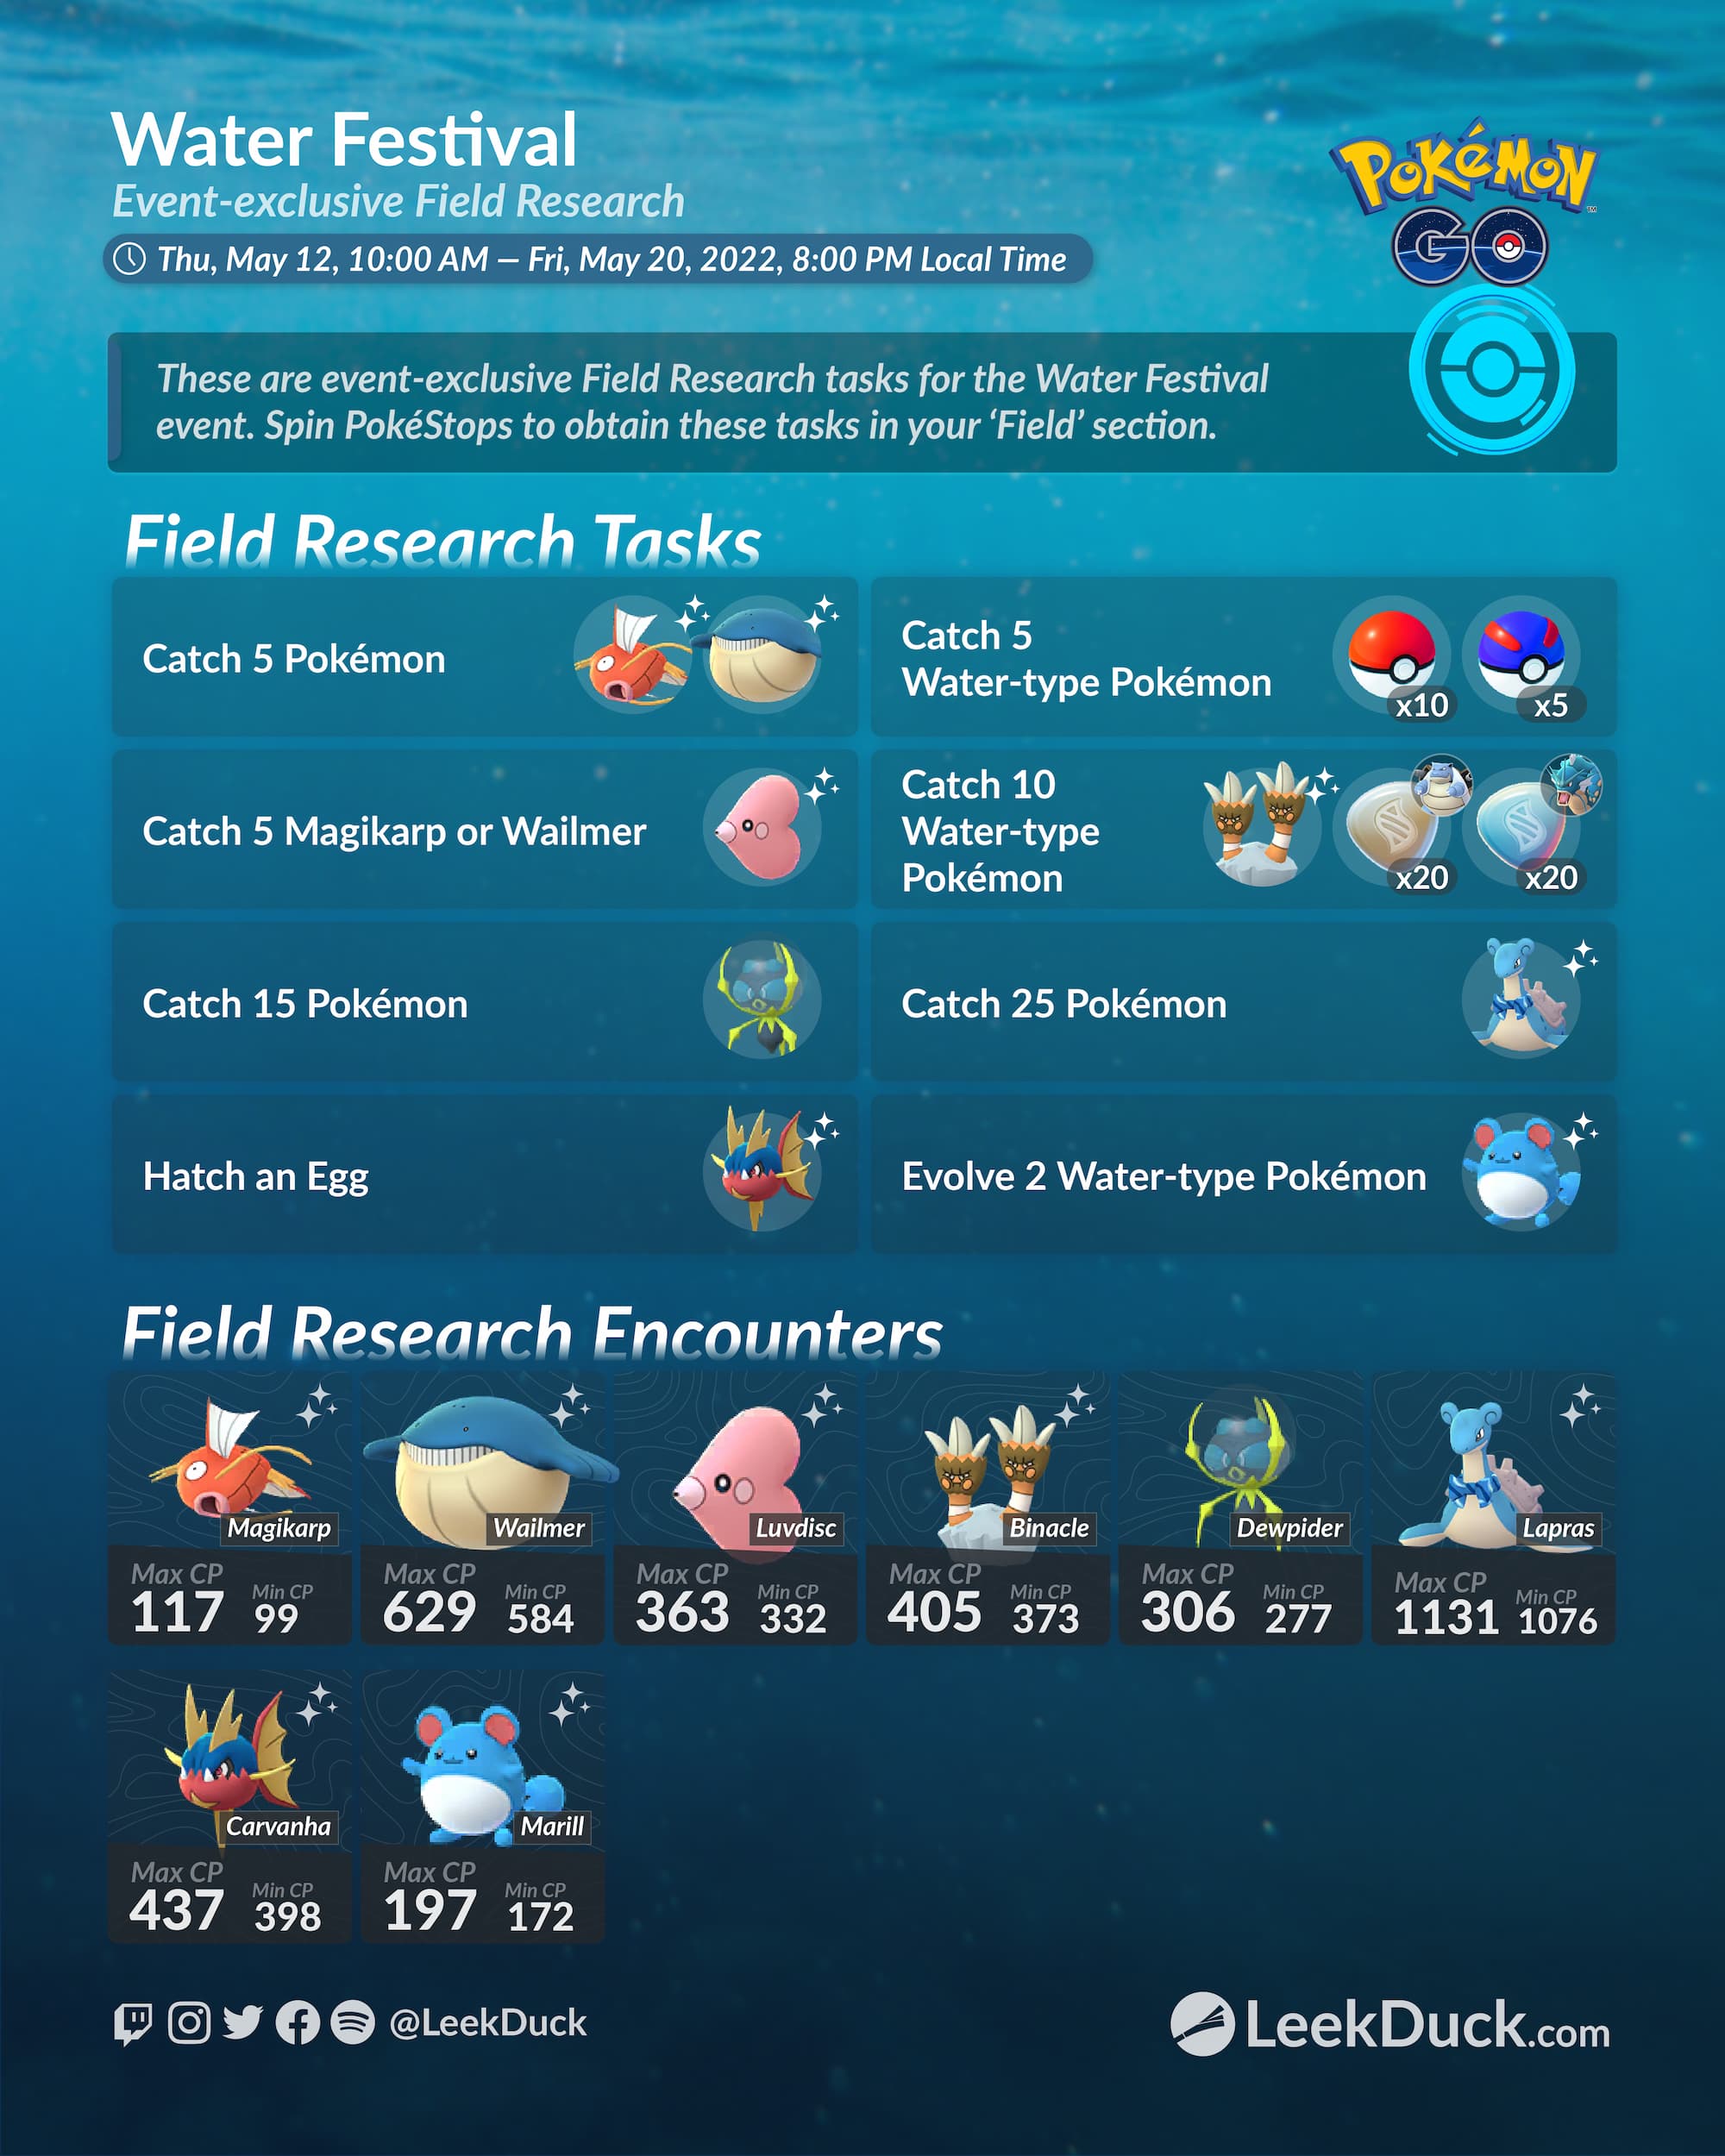 Water Festival - Leek Duck | Pokémon GO News and Resources